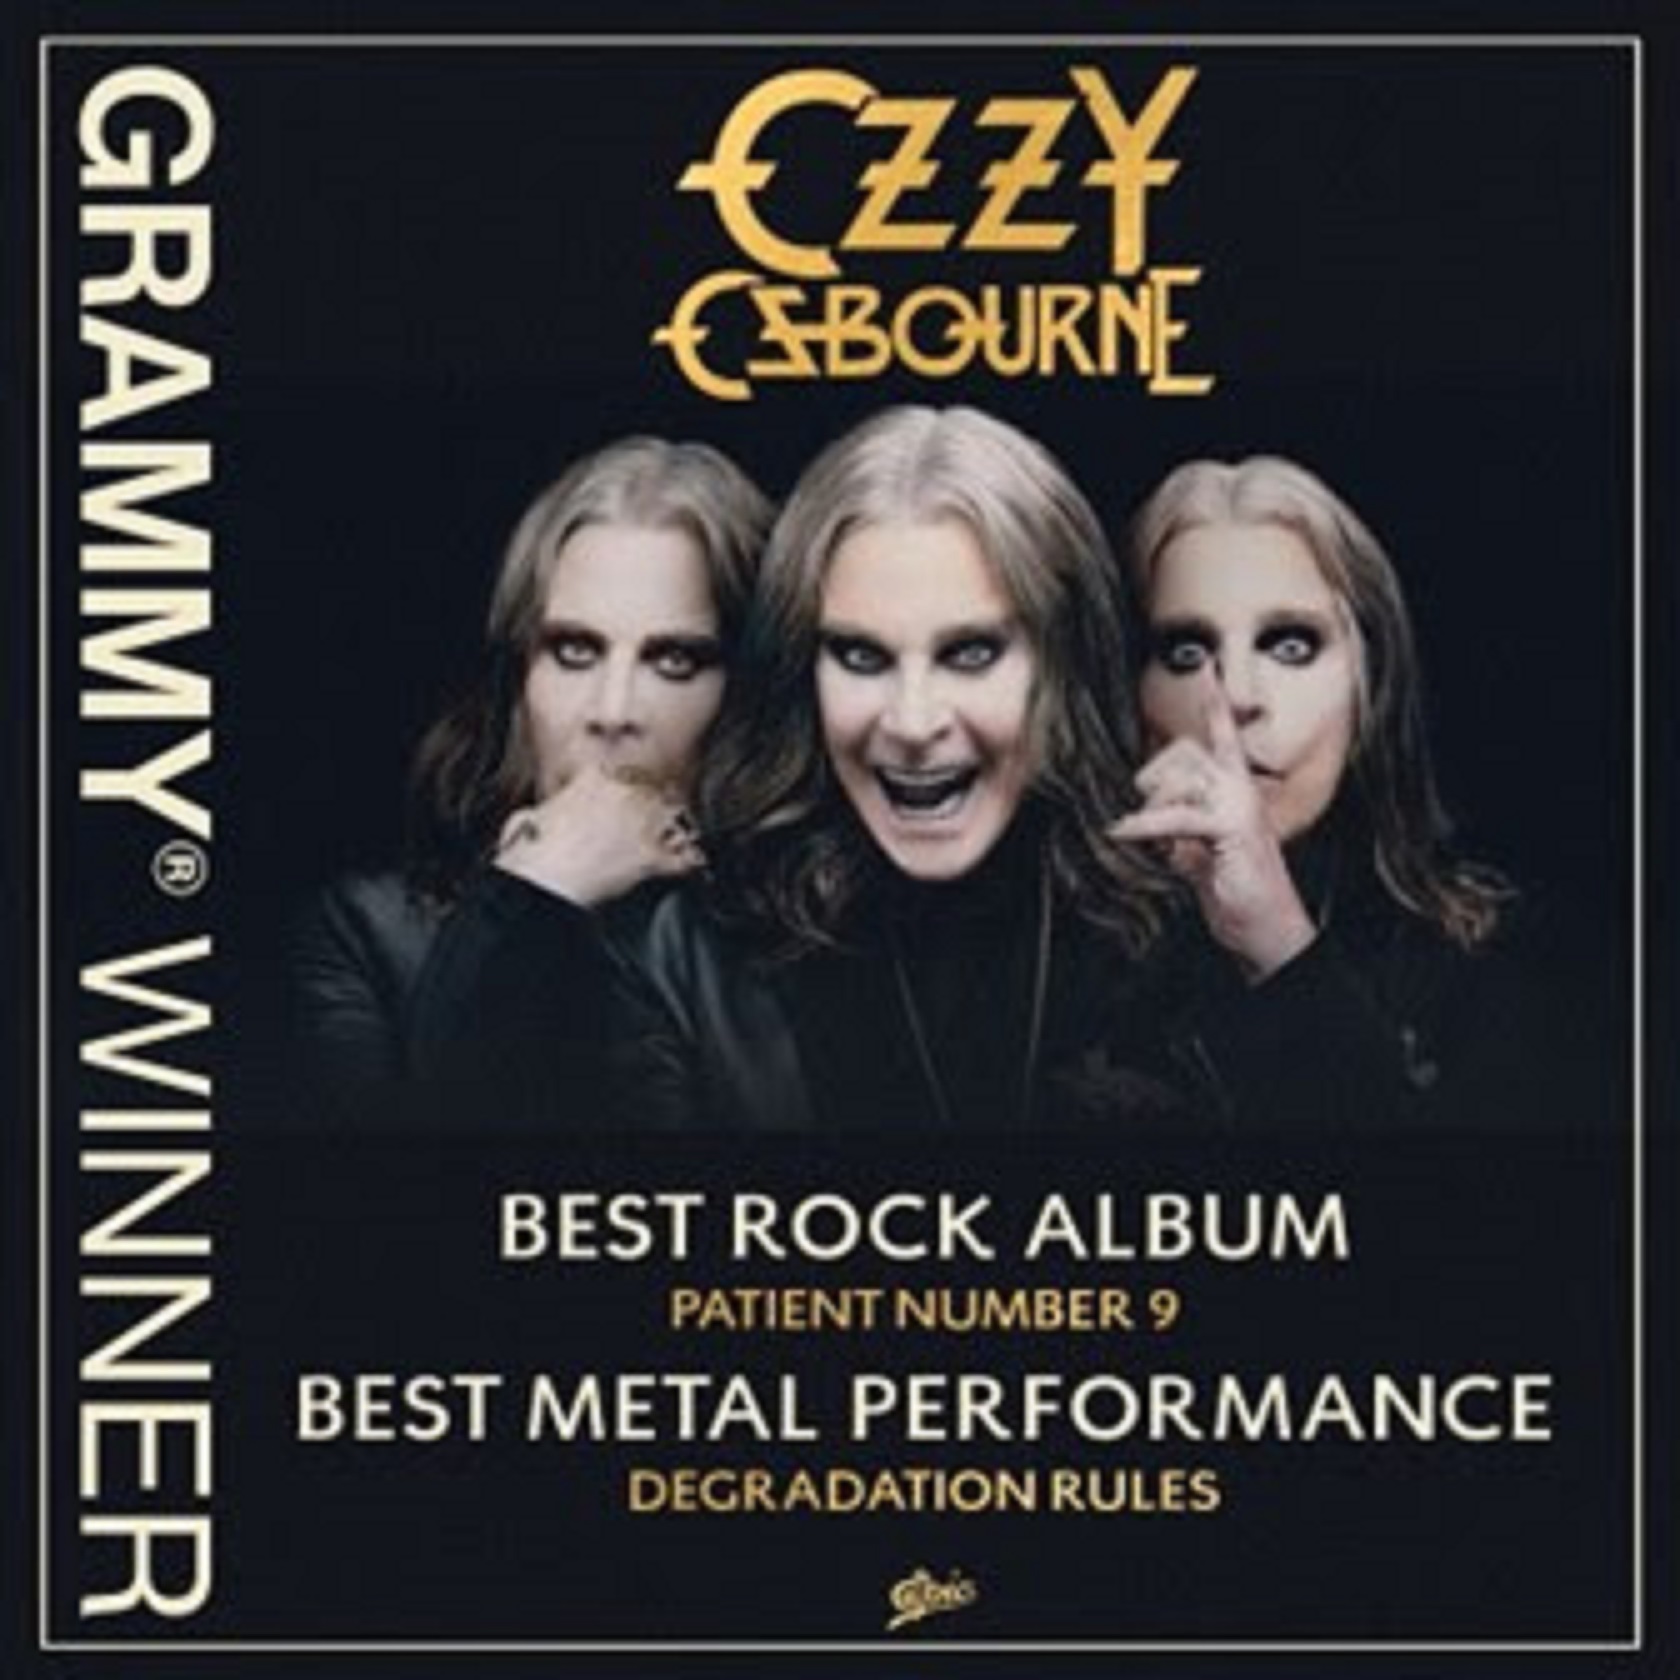 OZZY OSBOURNE WINS “BEST ROCK ALBUM” AND “BEST METAL PERFORMANCE” AT